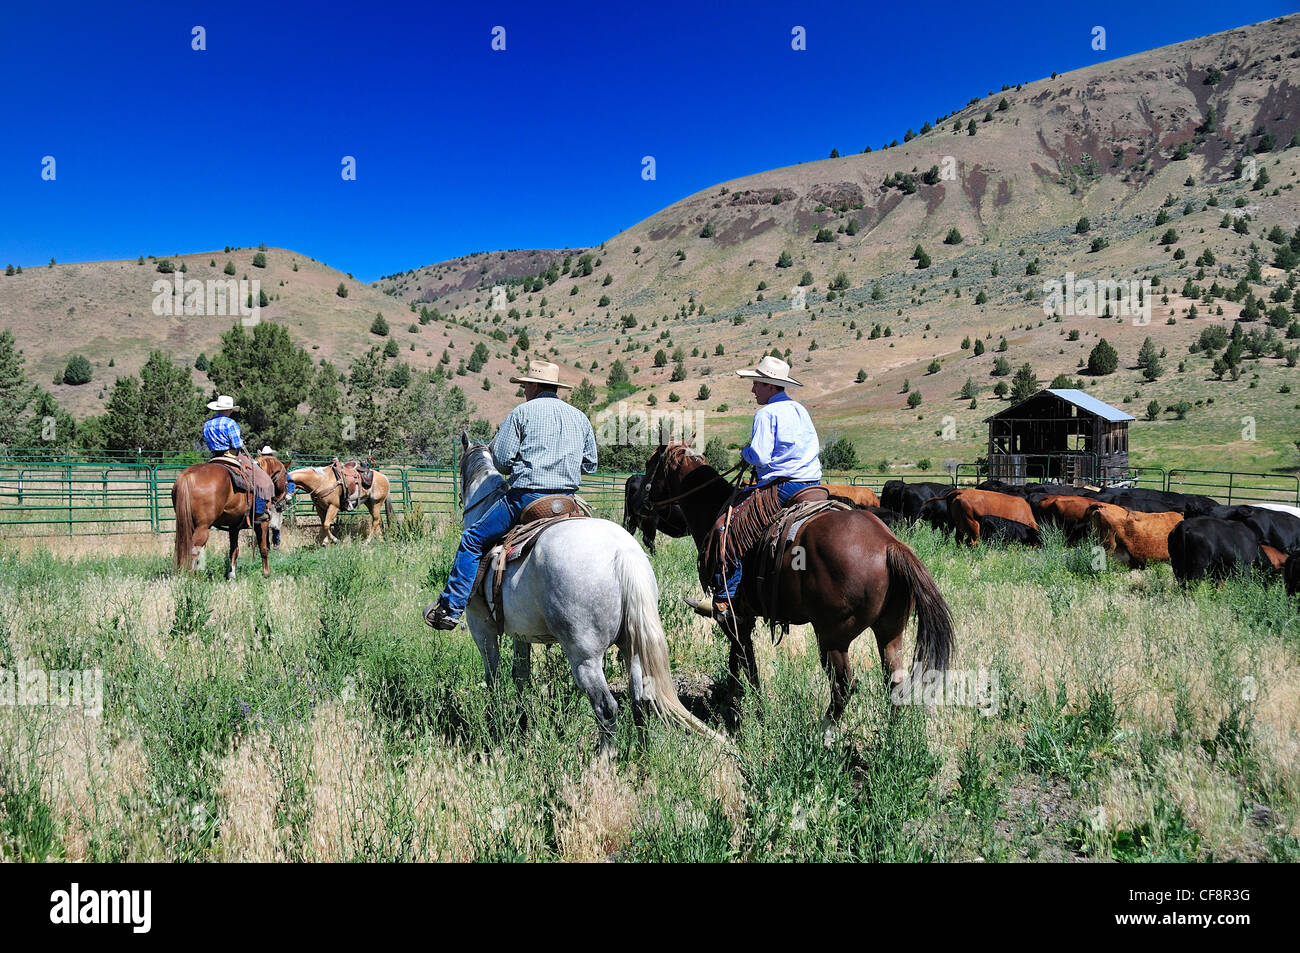 Wilson Ranch, fossili, Oregon, Stati Uniti d'America, Stati Uniti, America, Cattle Drive, cowboy, cowboy, cavalli Foto Stock